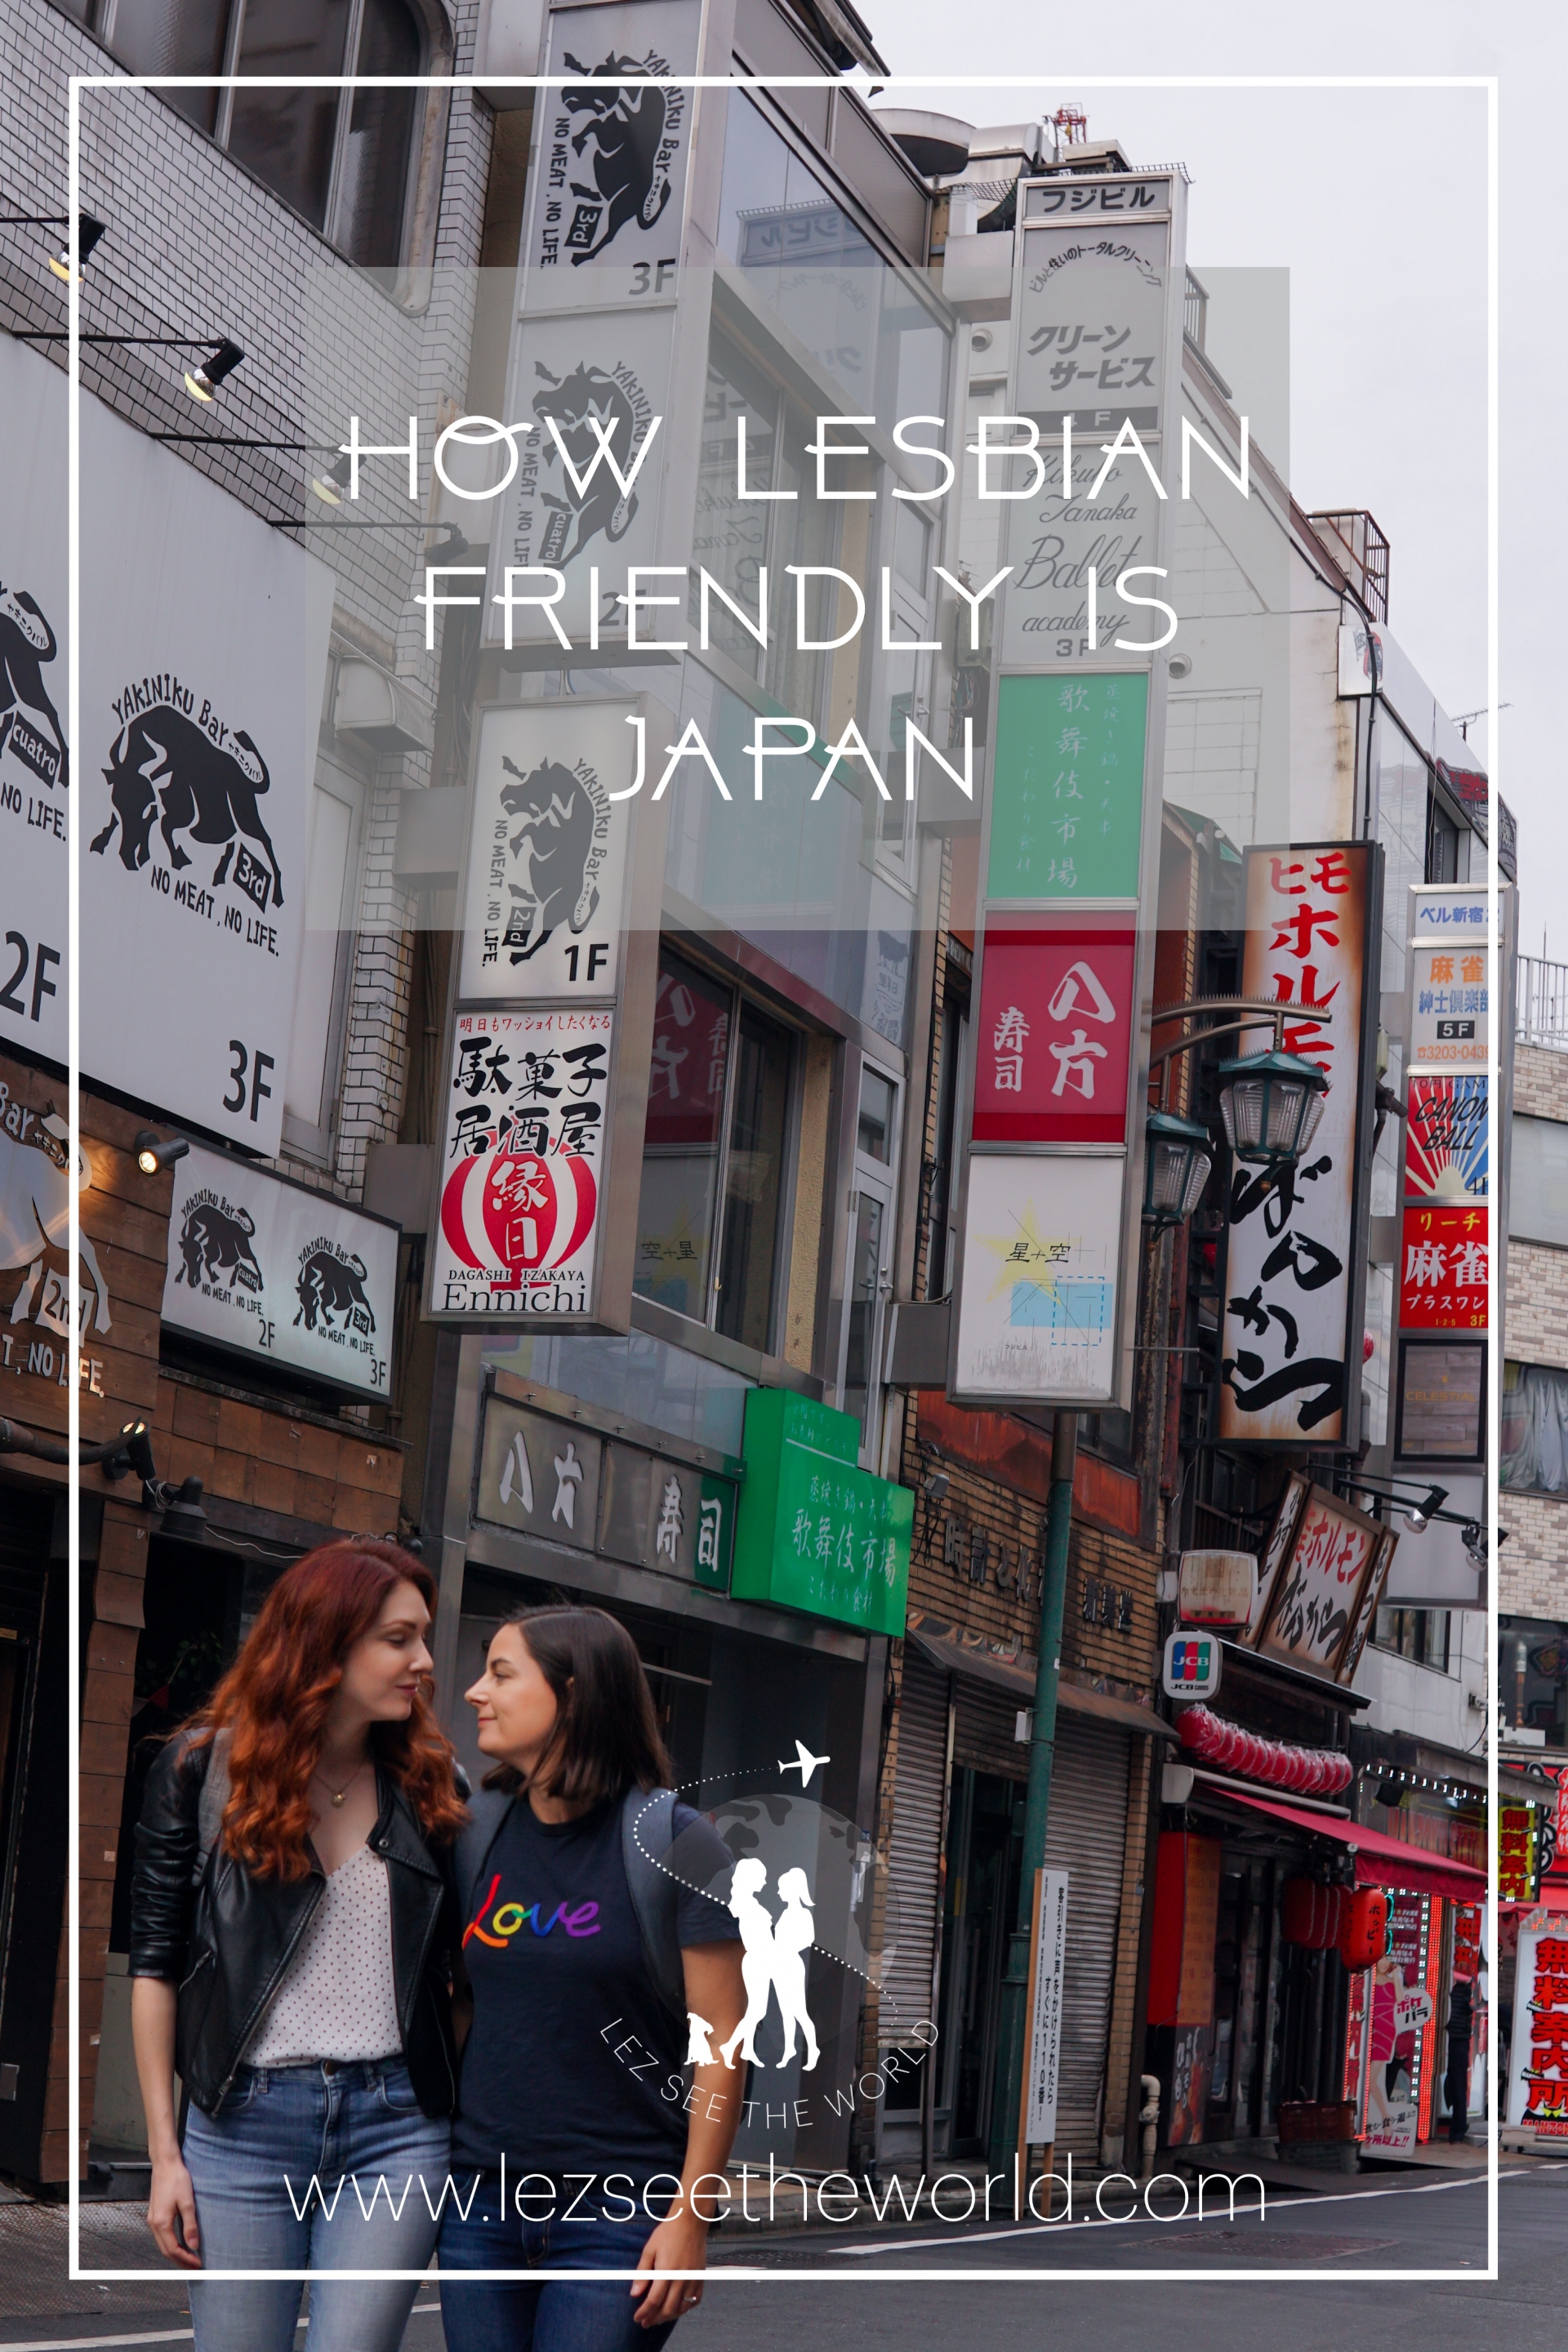 How Lesbian Friendly is Japan